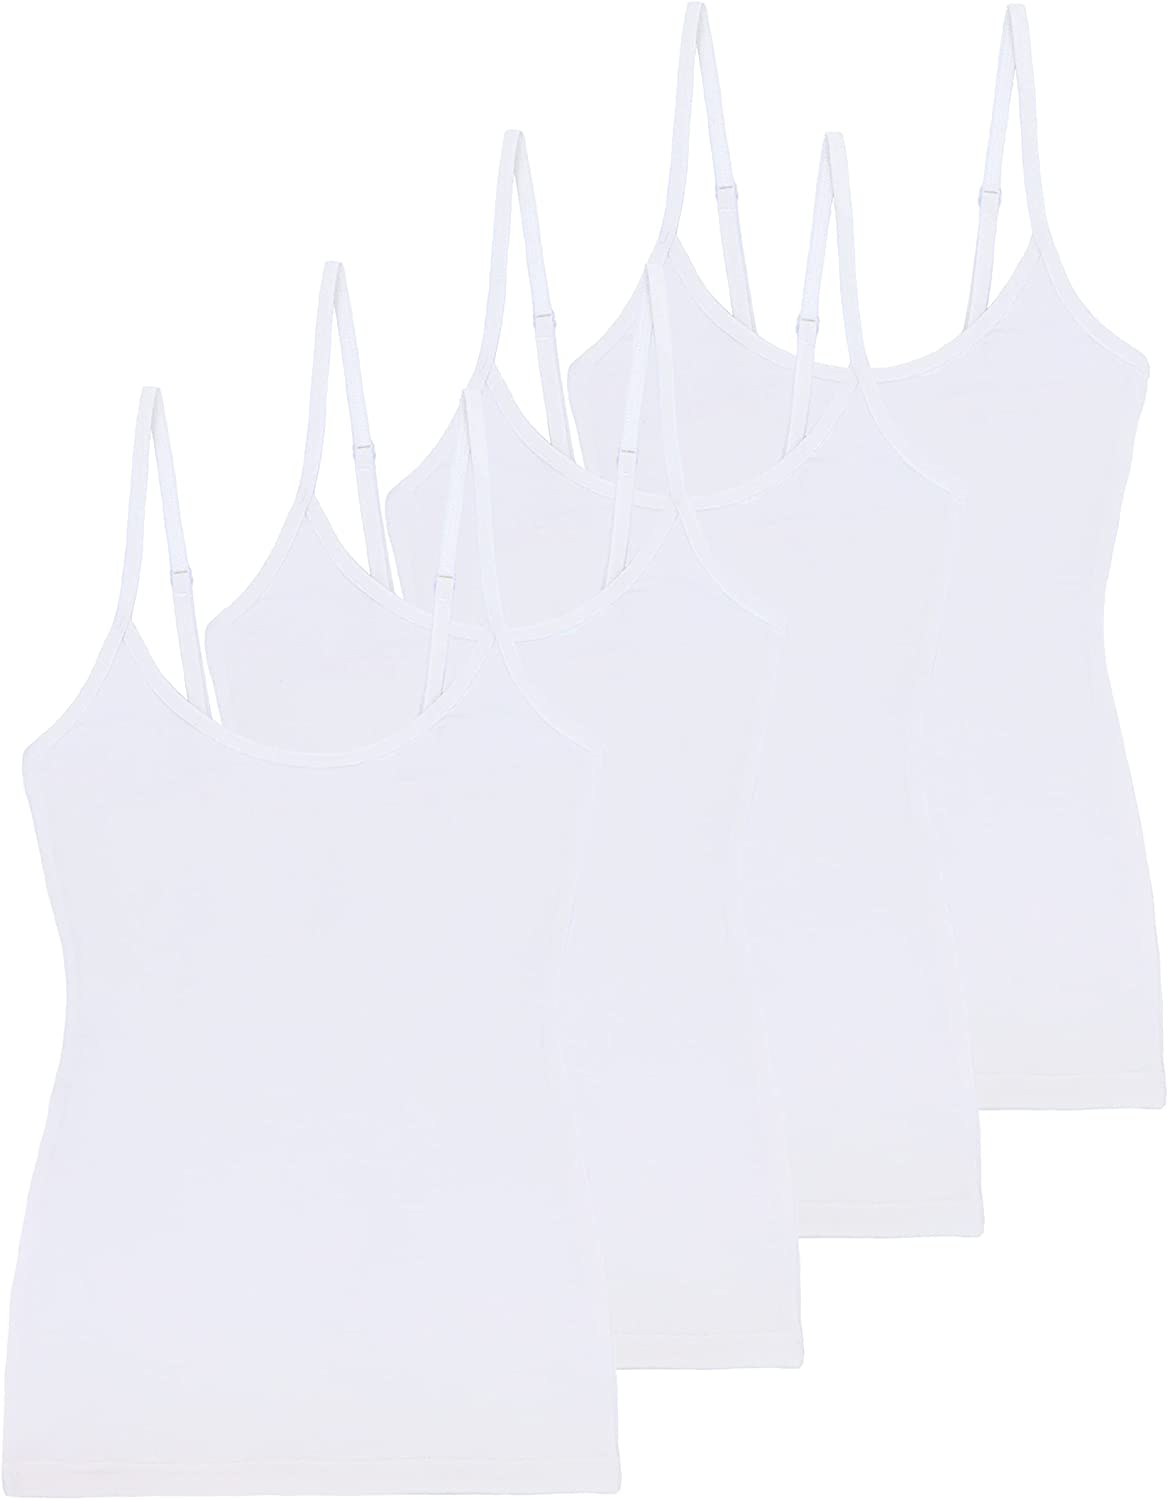 Comfneat Women's 4-Pack Slim-Fit Camisoles Cotton Adjustable